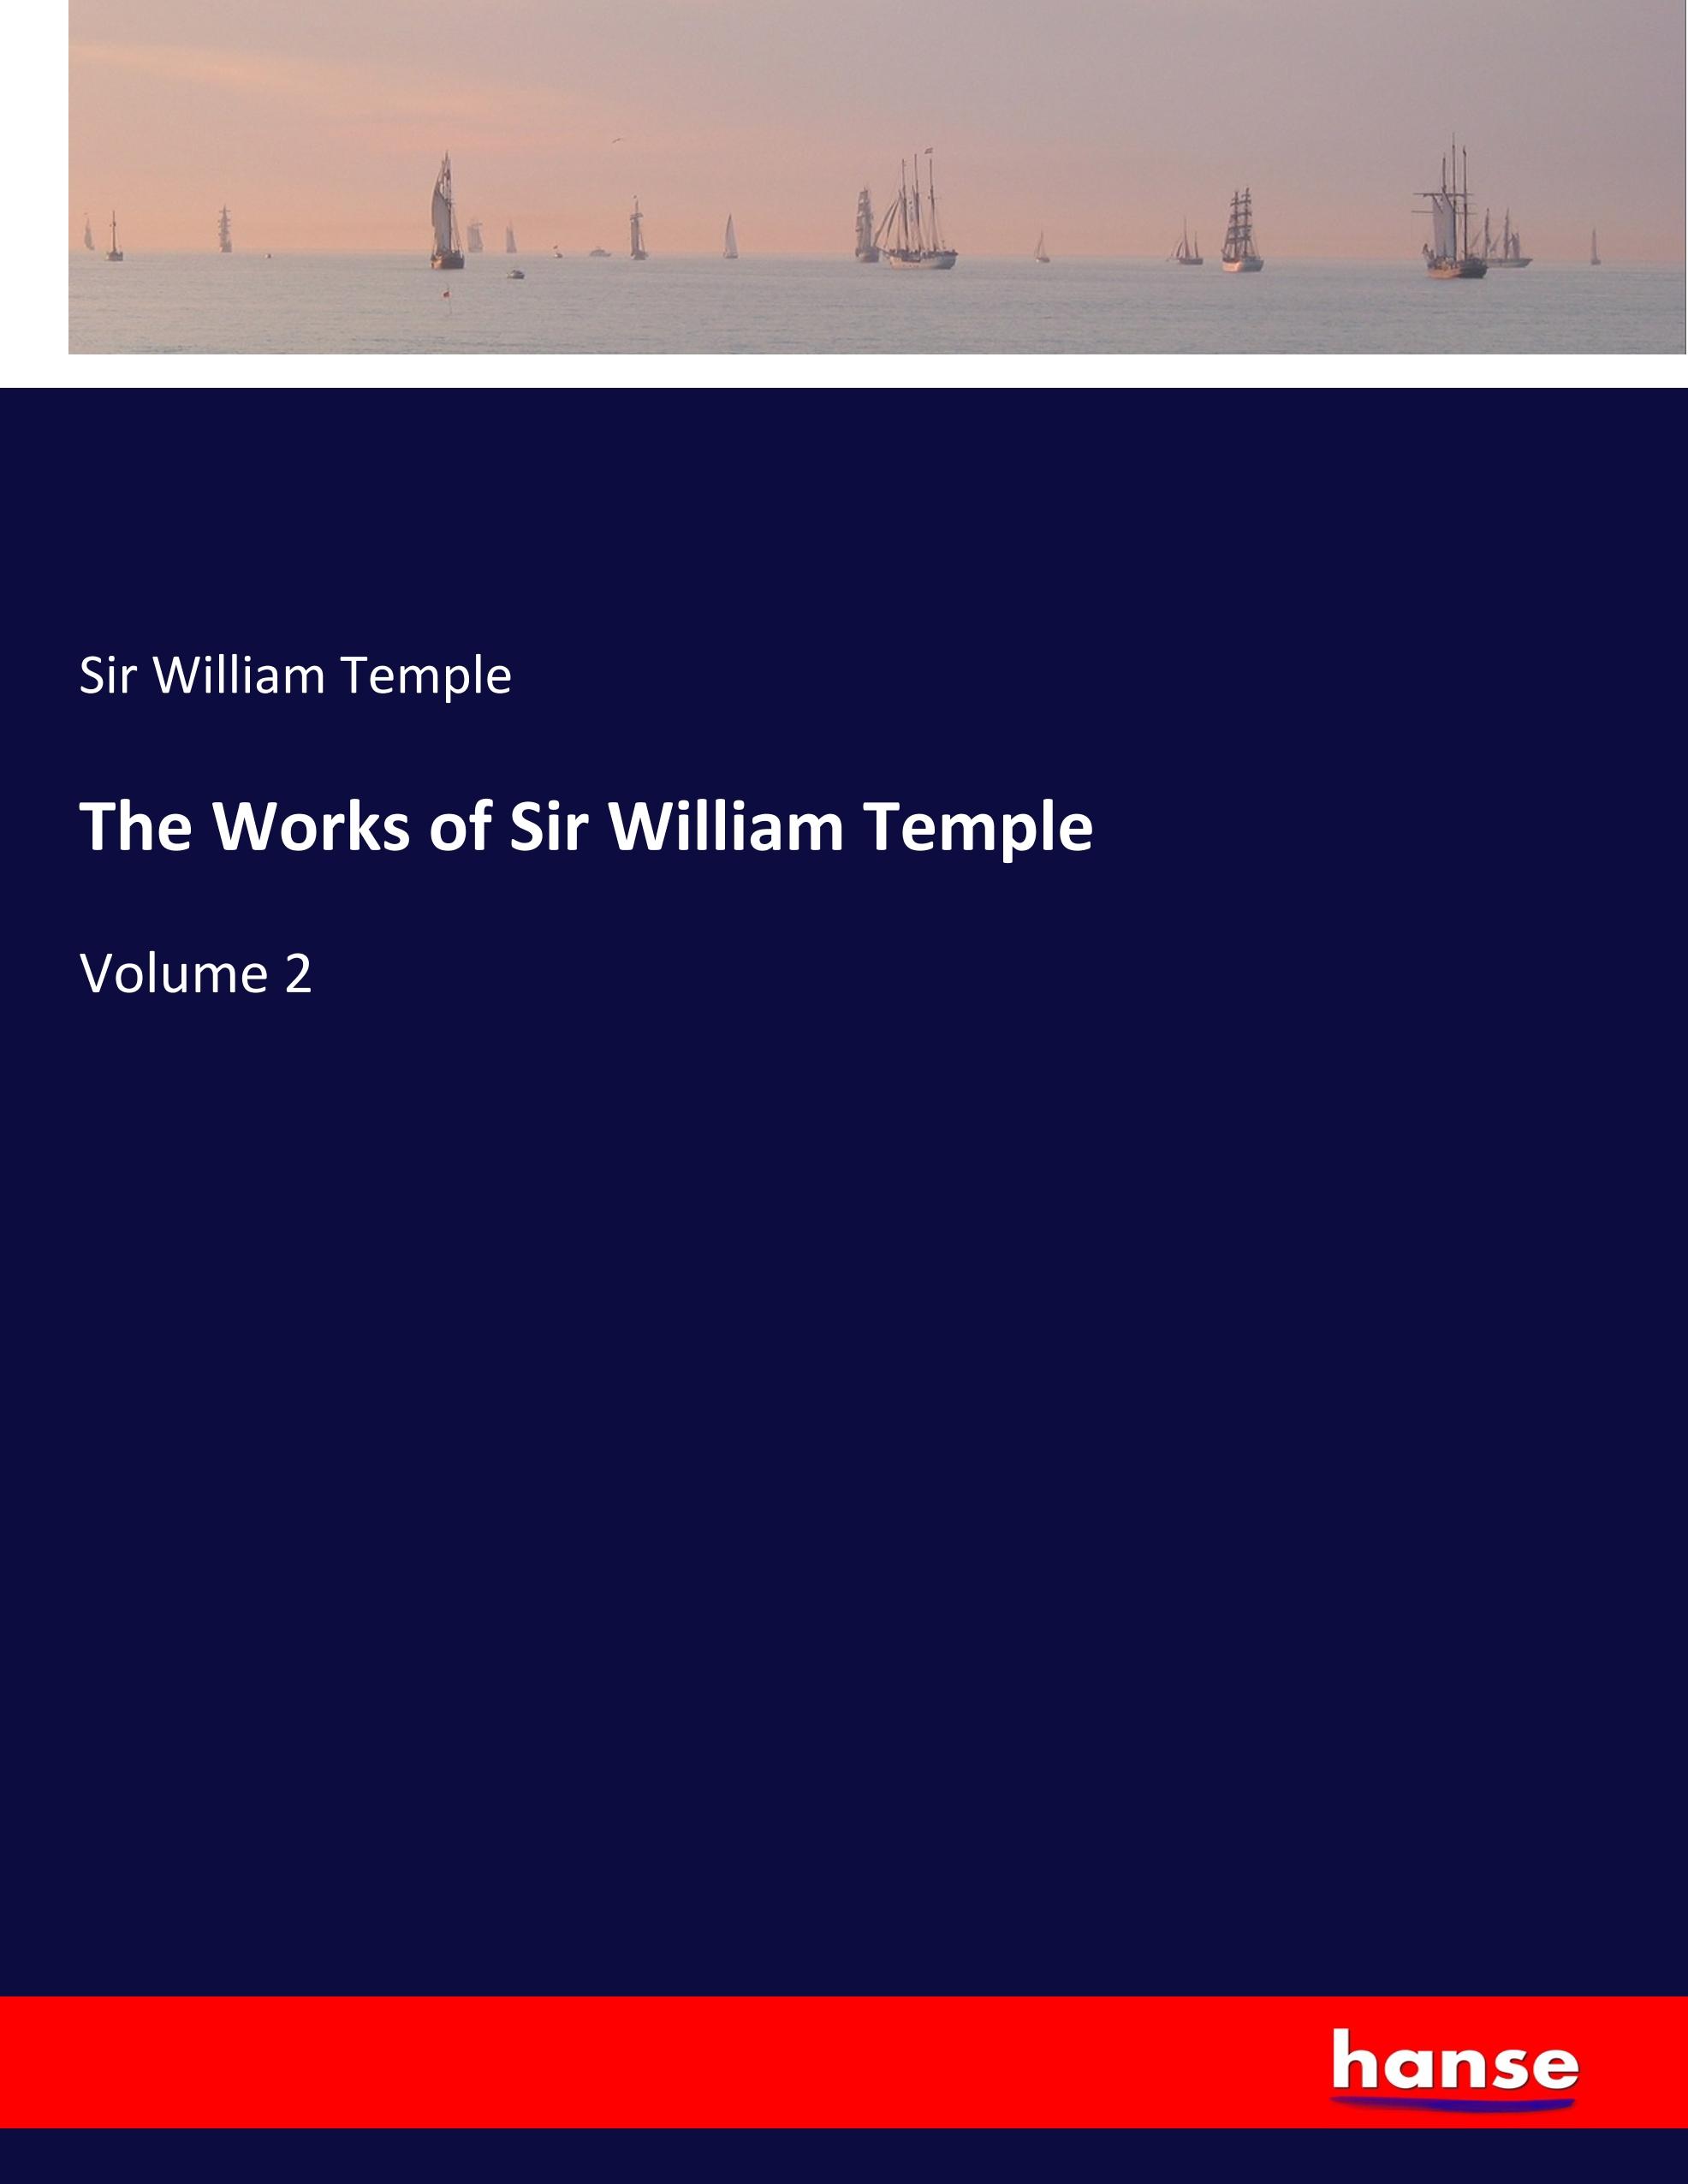 The Works of Sir William Temple / Volume 2 / Sir William Temple / Taschenbuch / Paperback / 576 S. / Englisch / 2019 / hansebooks / EAN 9783337816032 - Temple, Sir William